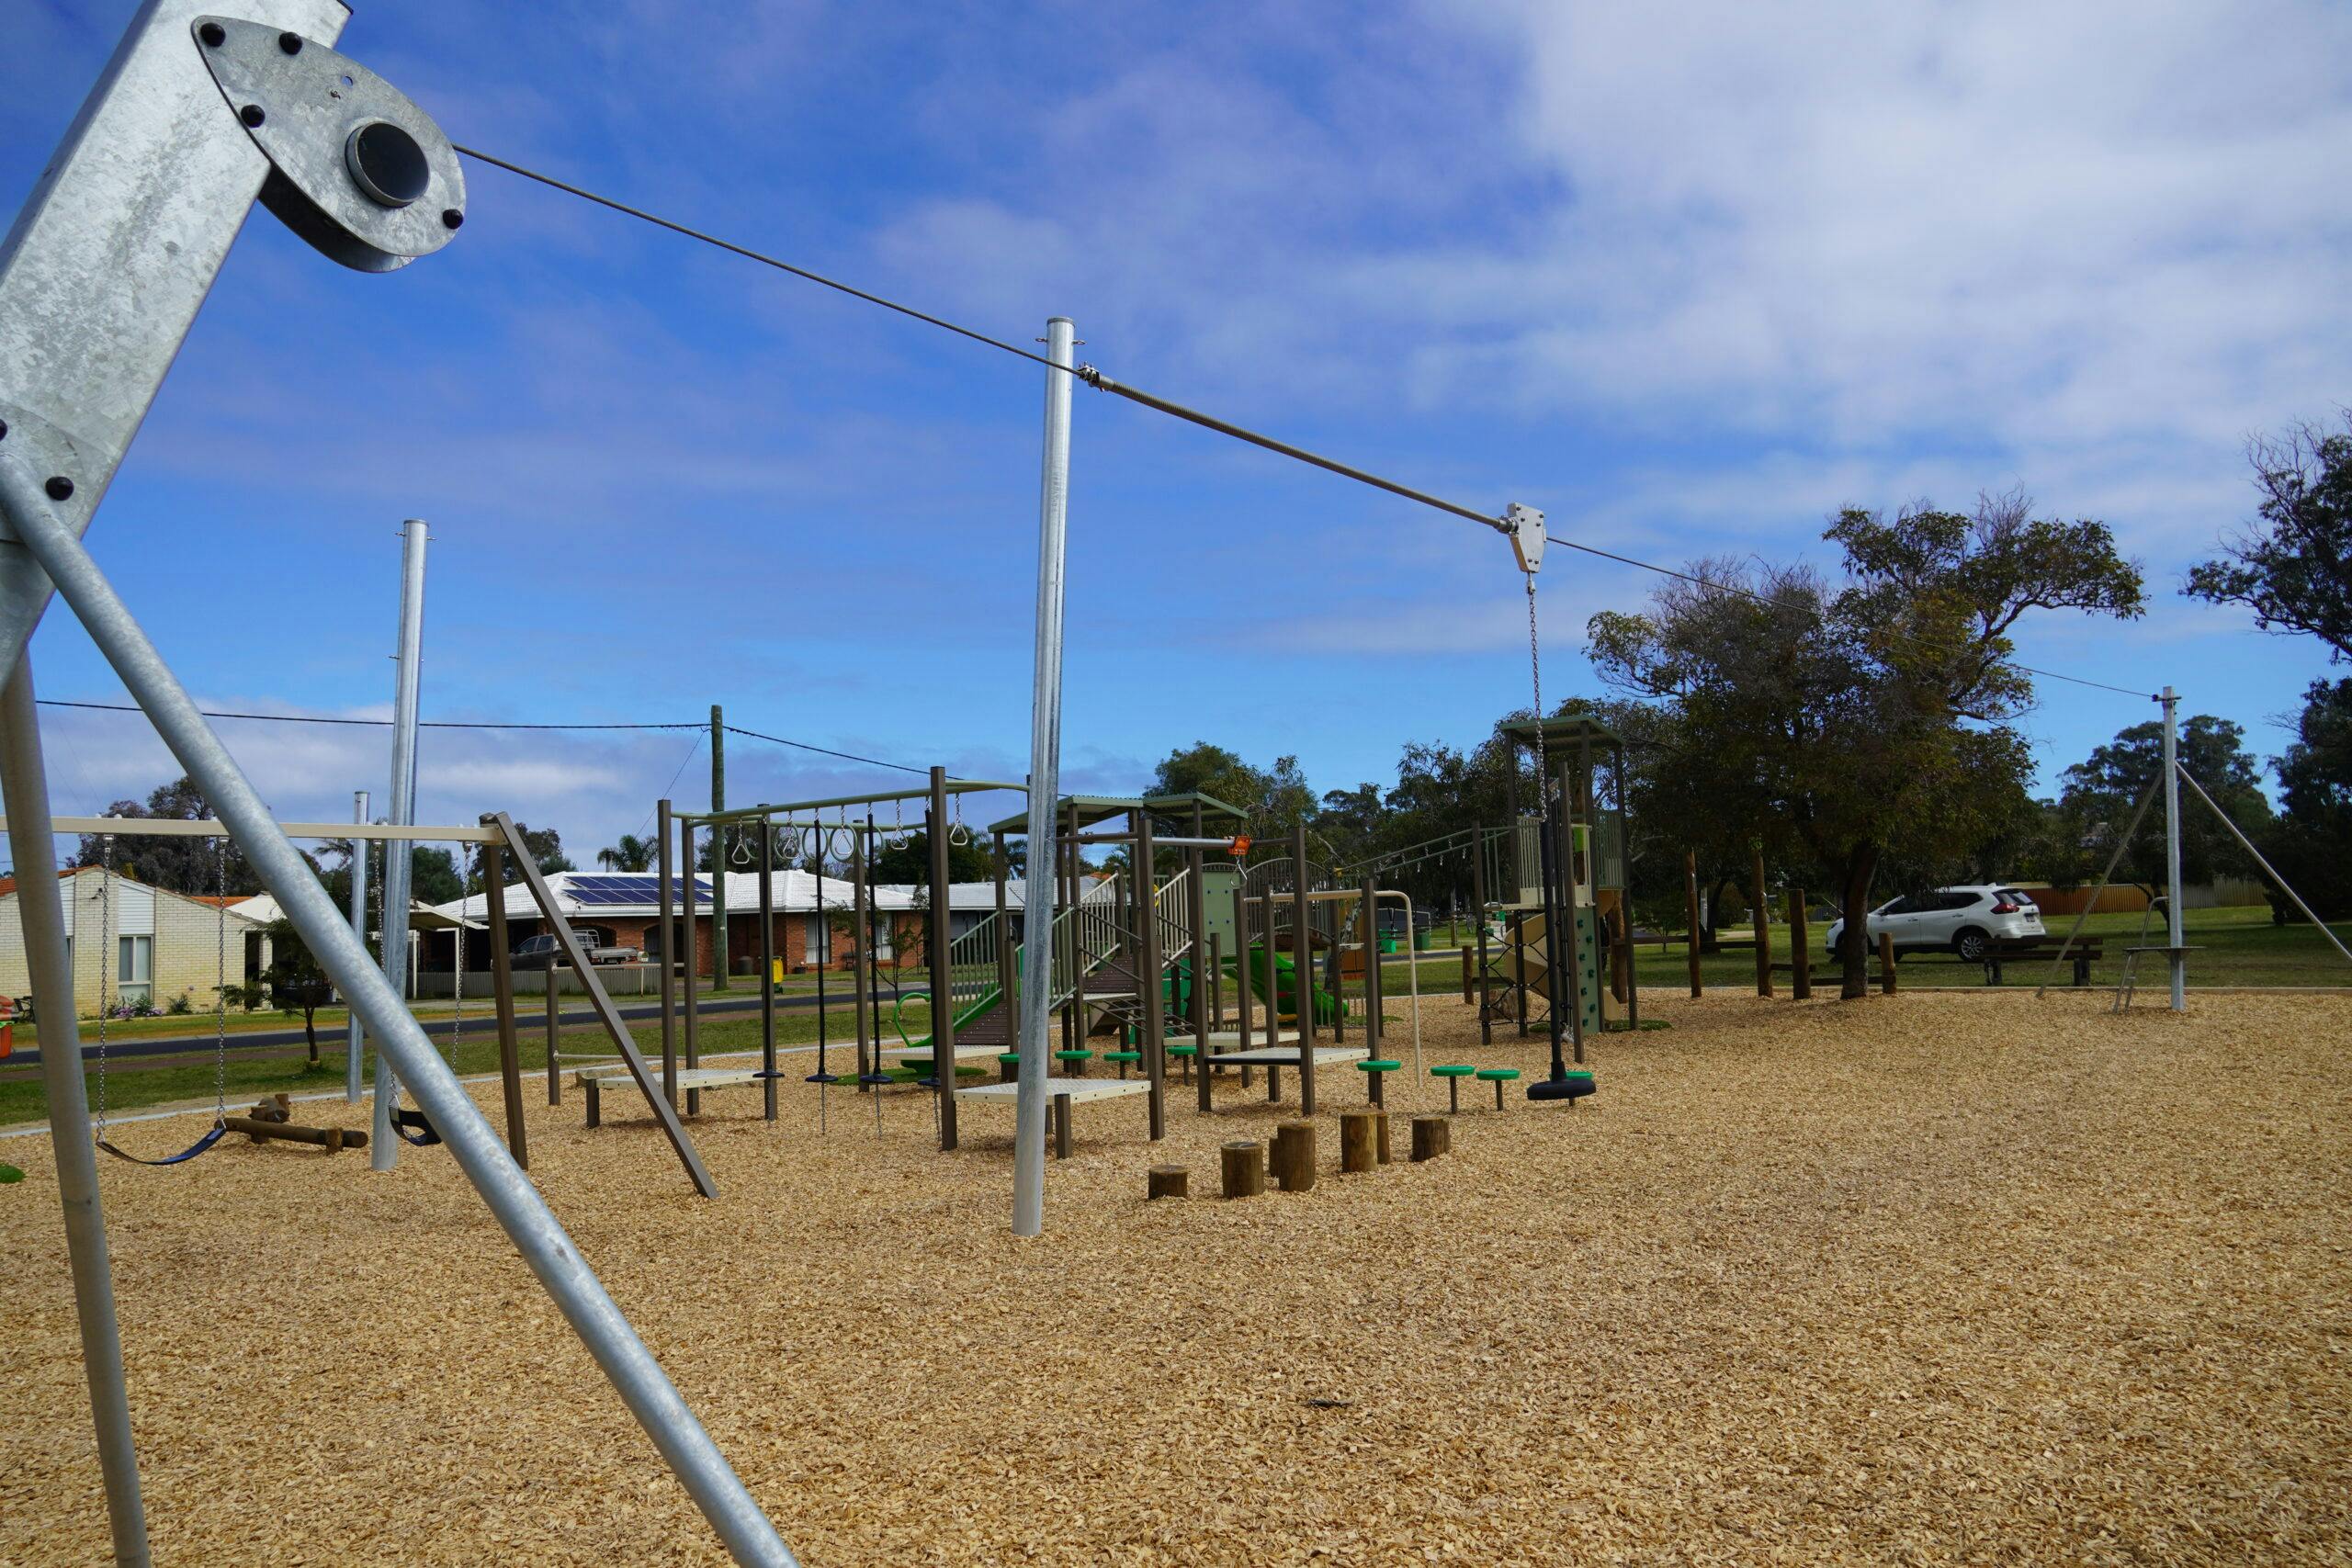 New playground equipment at Bellemore Park